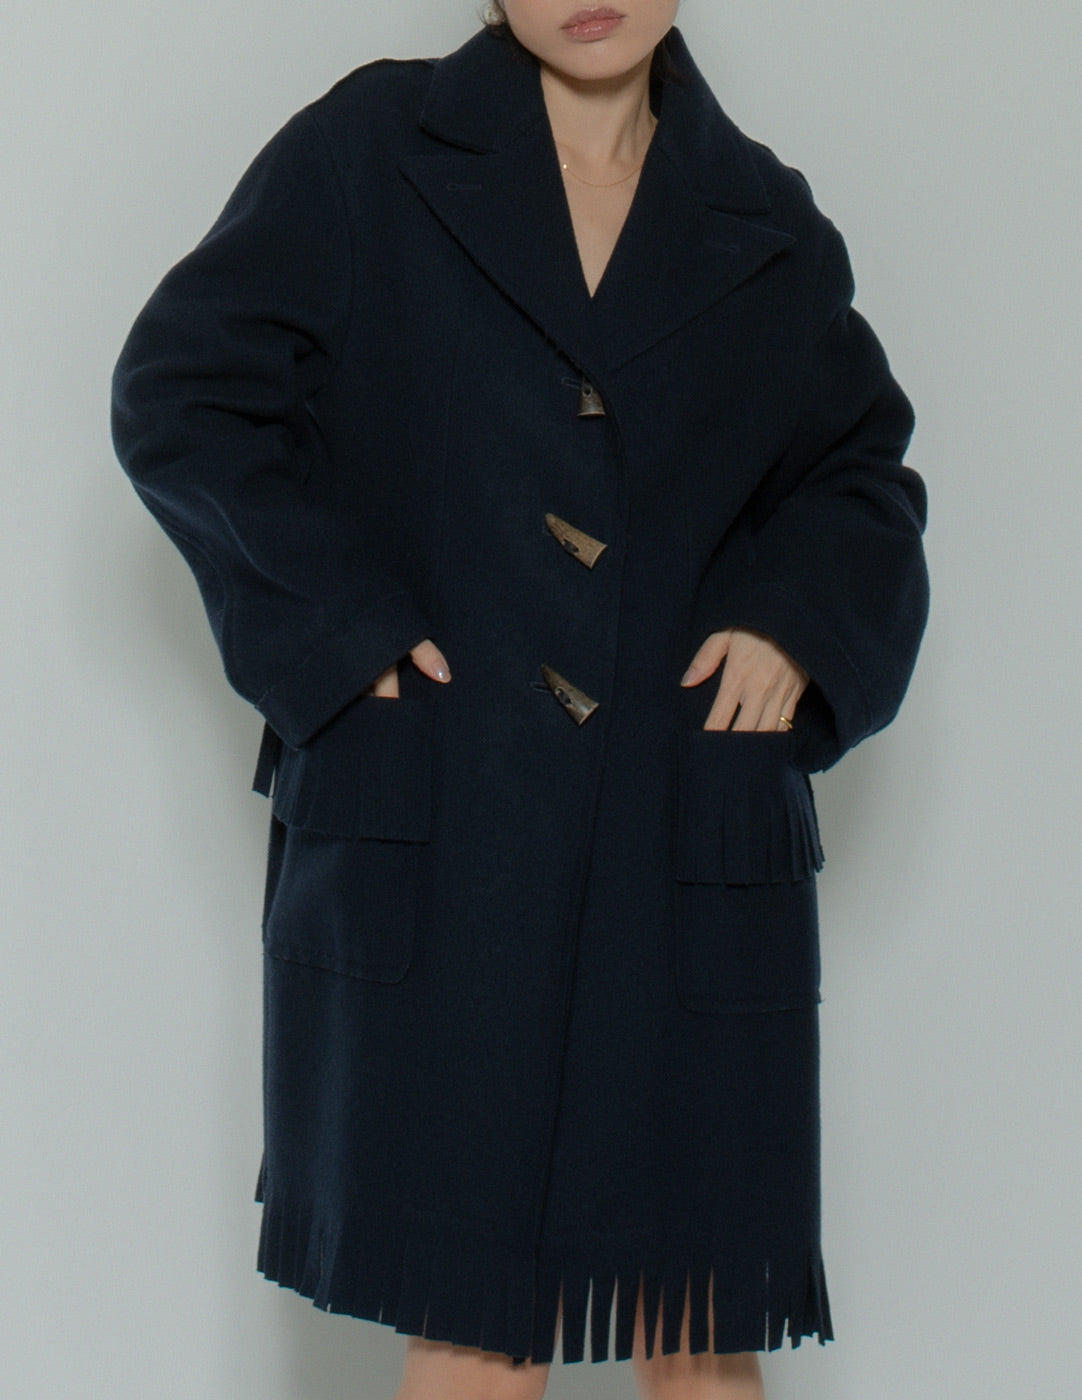 vintage navy wool coat with fringes